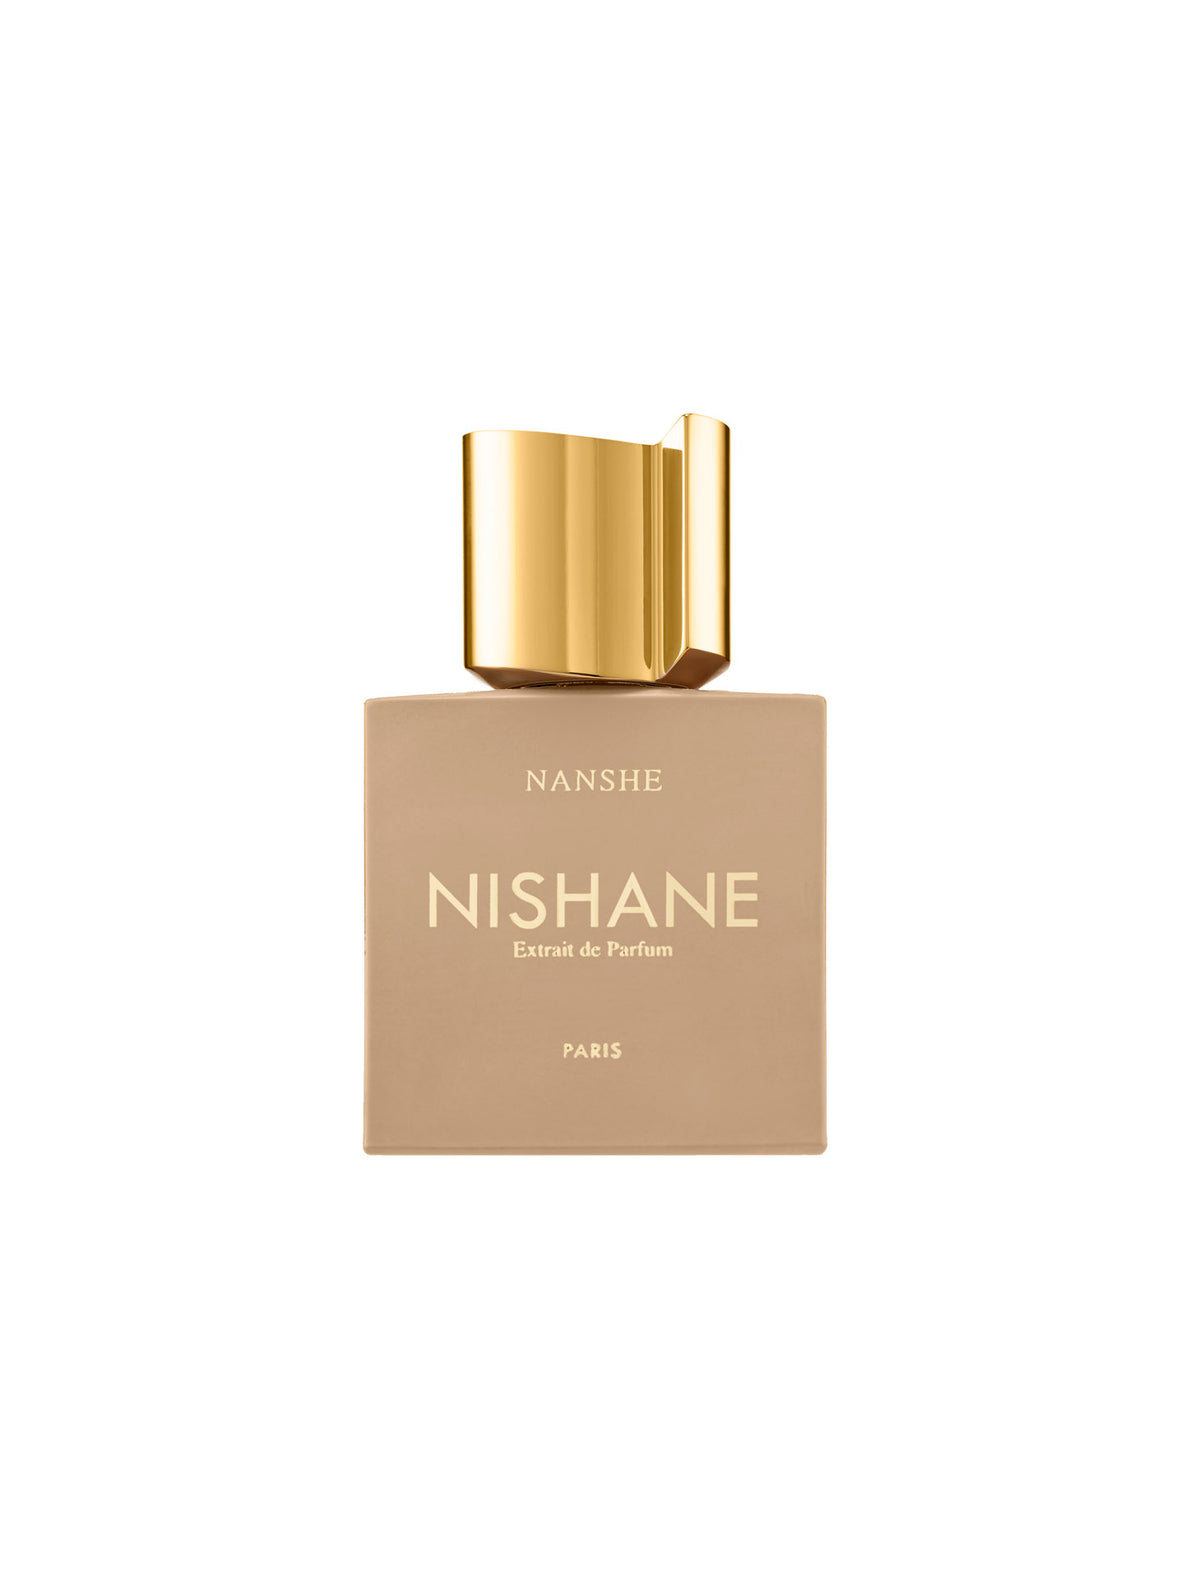 Nishane Nanshe Extrait de Parfum 100ml